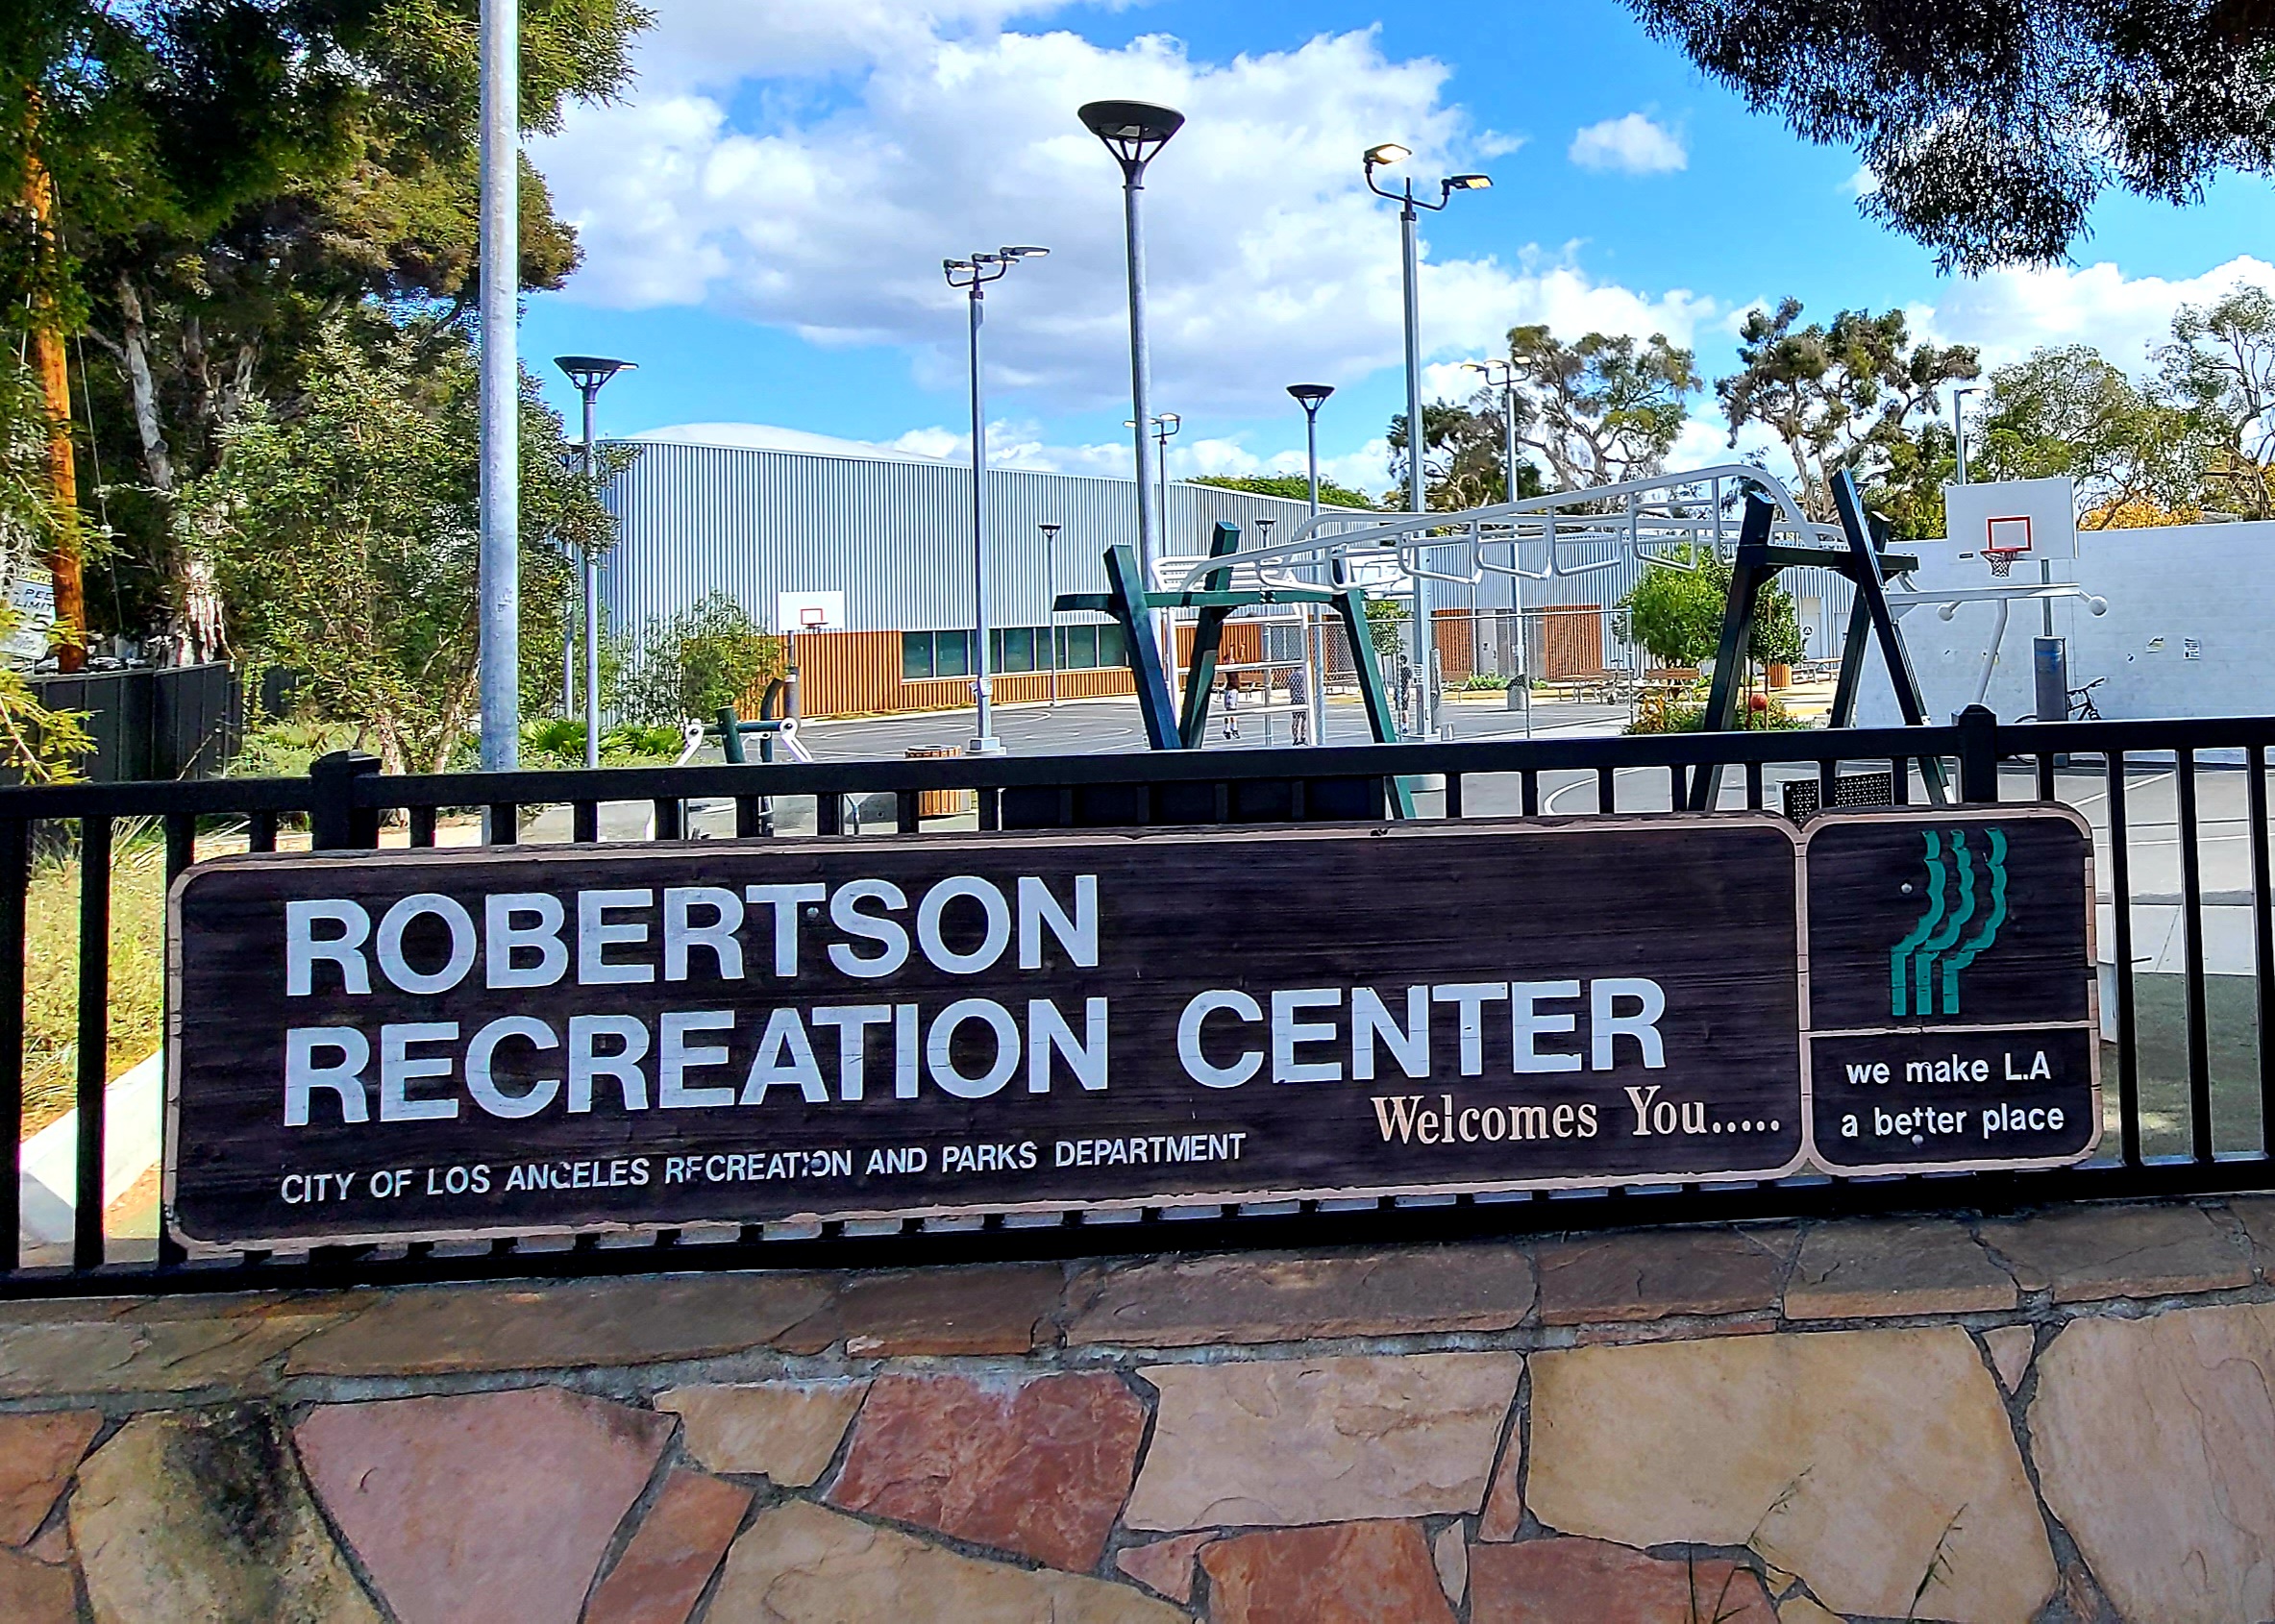 Robertson Recreation Center Fall Festival